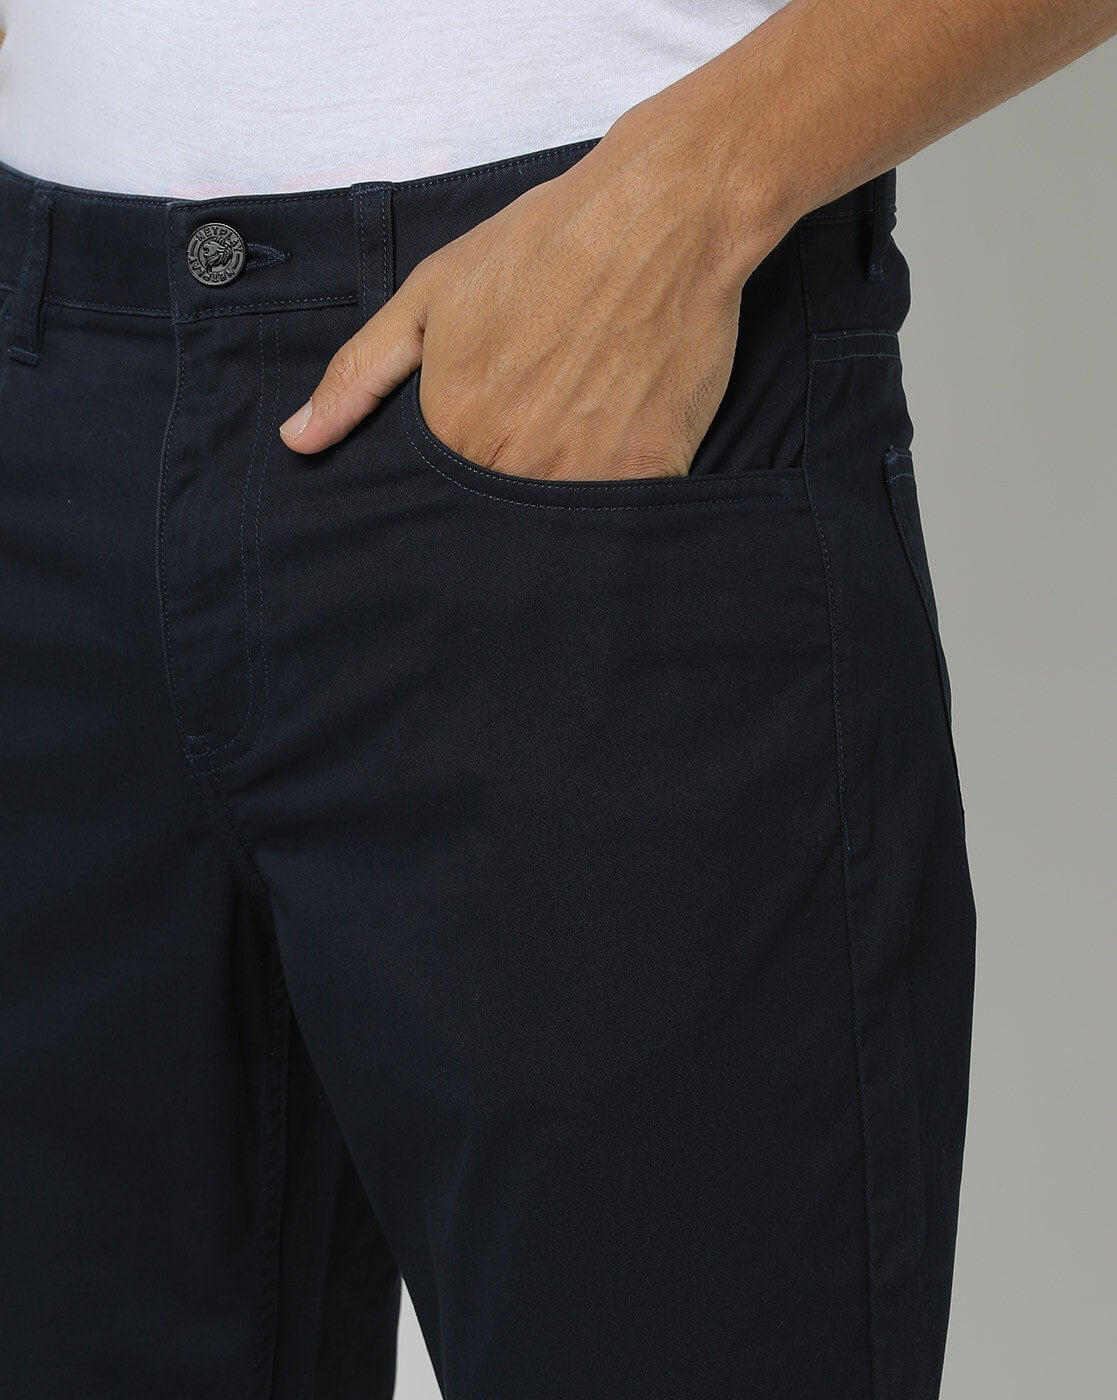 Jeans & Pants | combo pant & shirt 38waist netplay brnd | Freeup